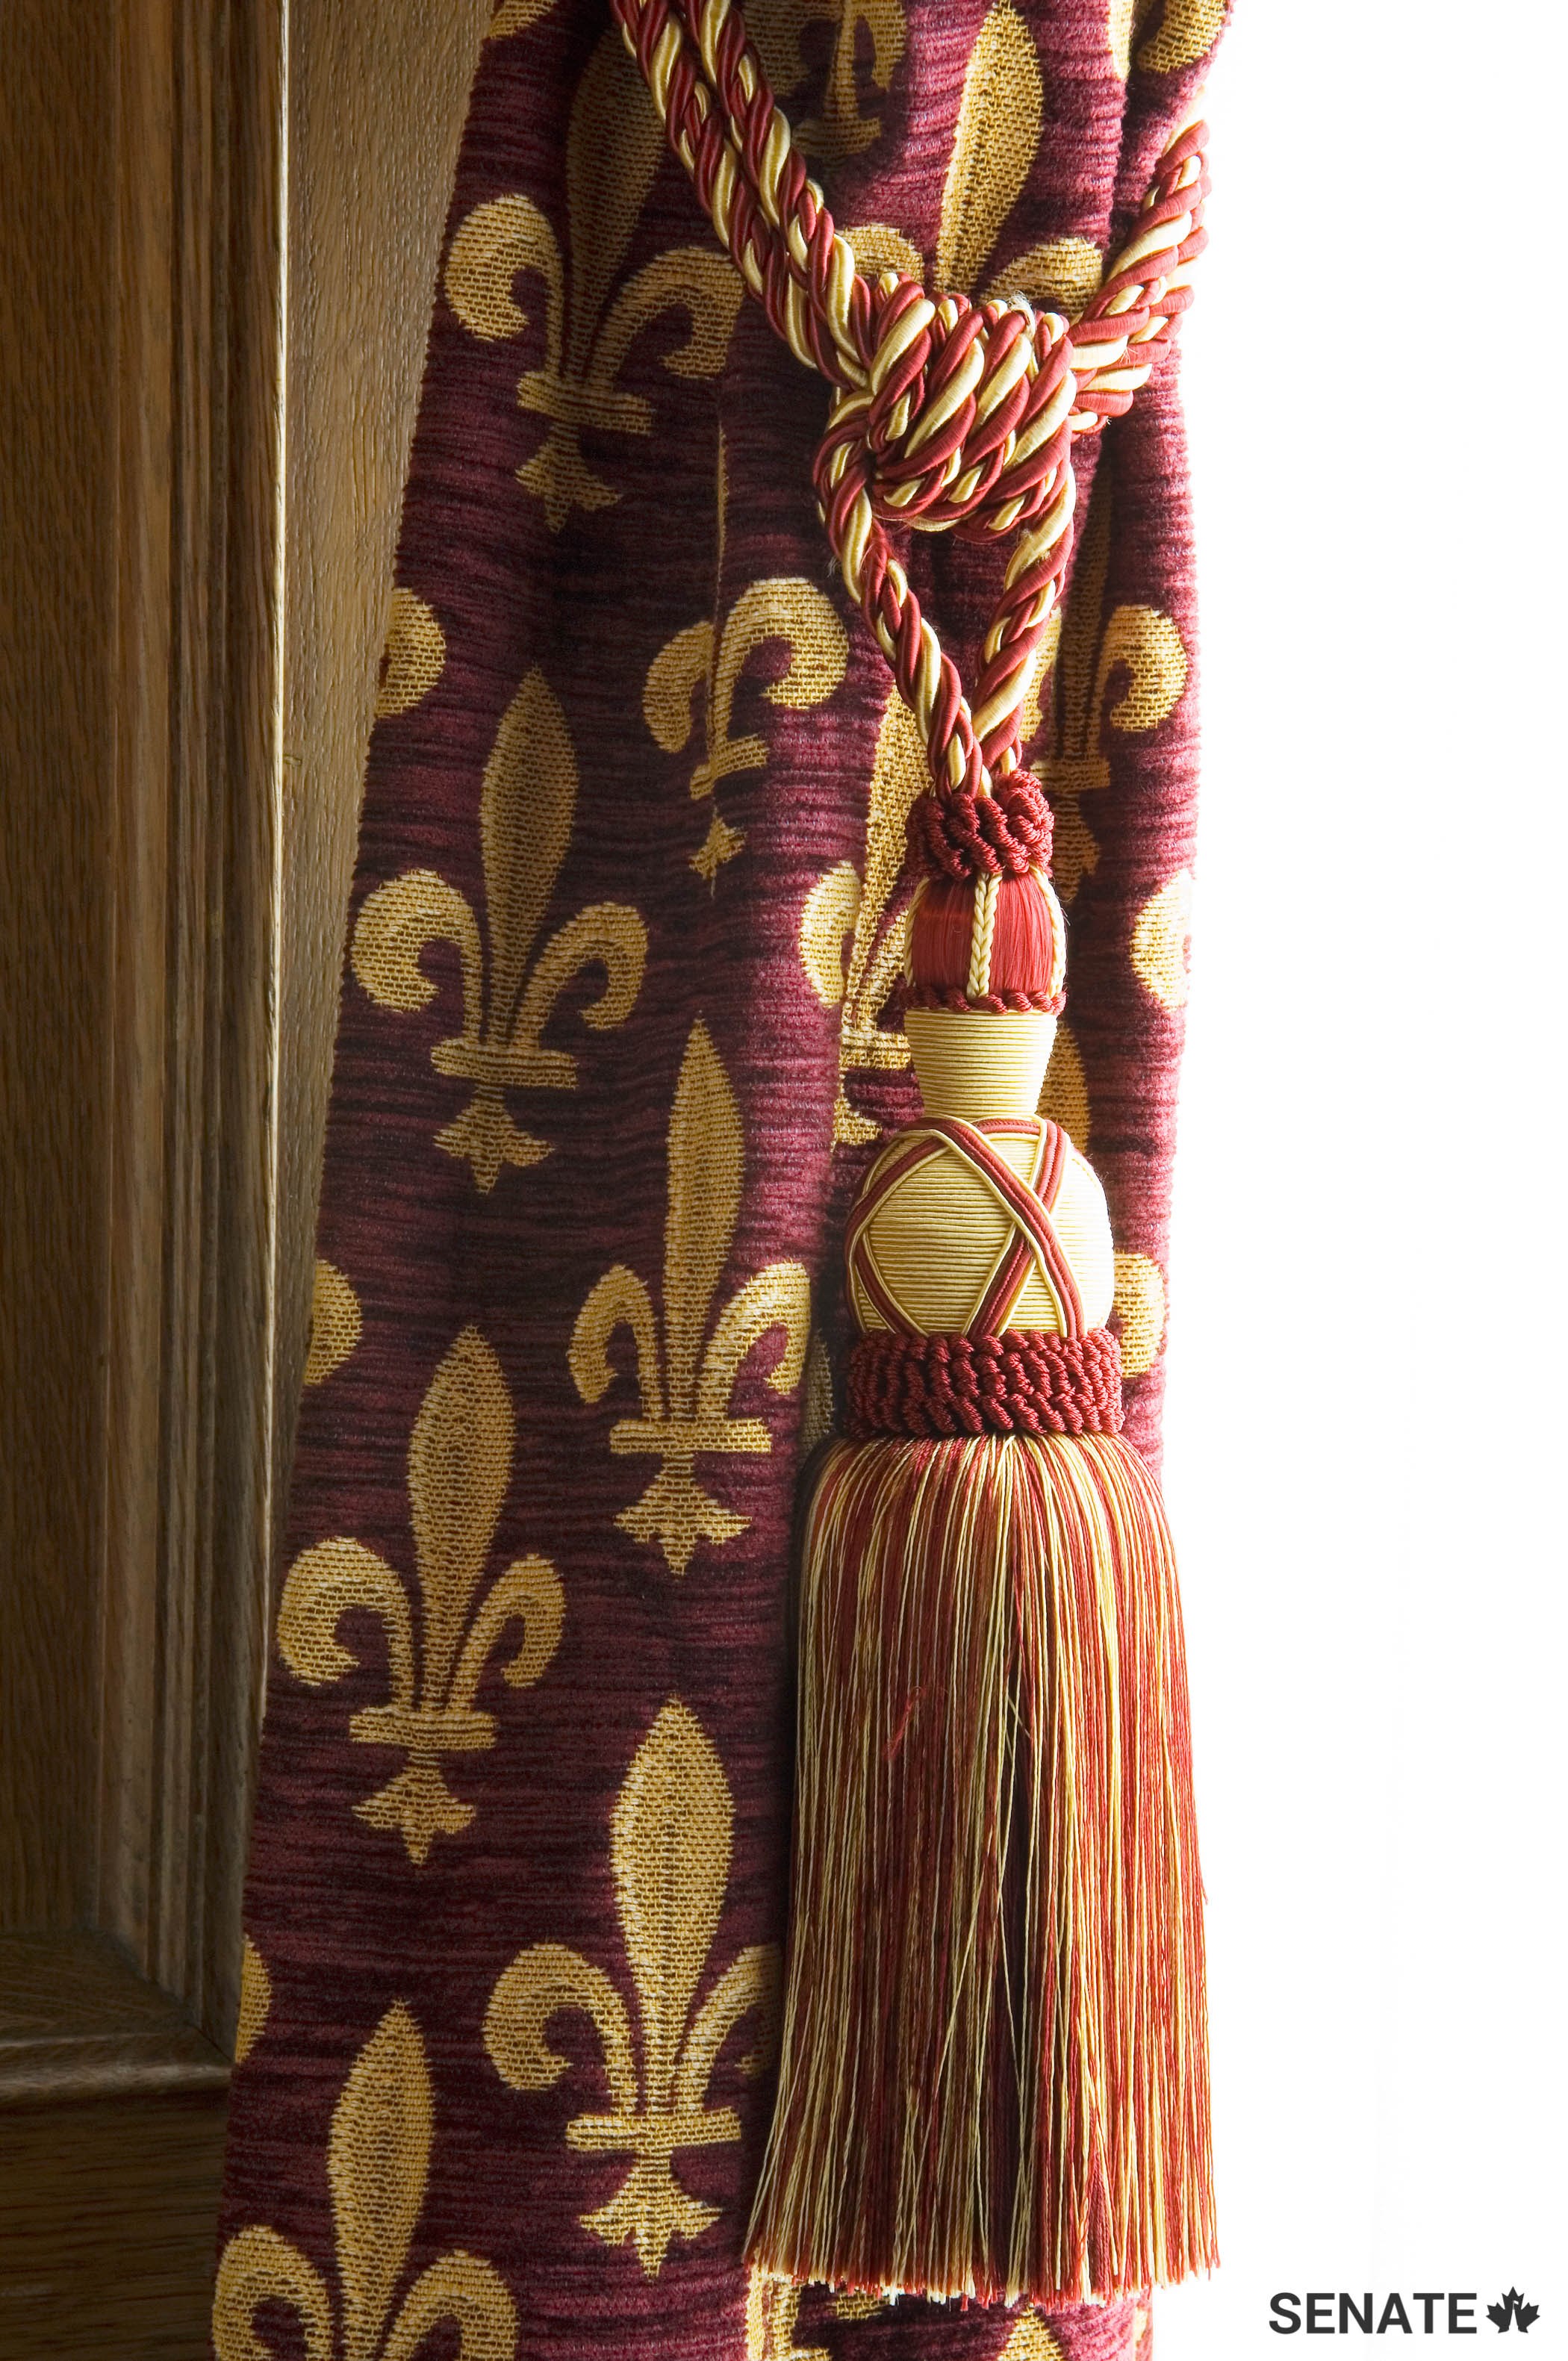 The fleur-de-lis, which was the royal symbol of the French Bourbon dynasty, is featured throughout the Salon de la Francophonie.